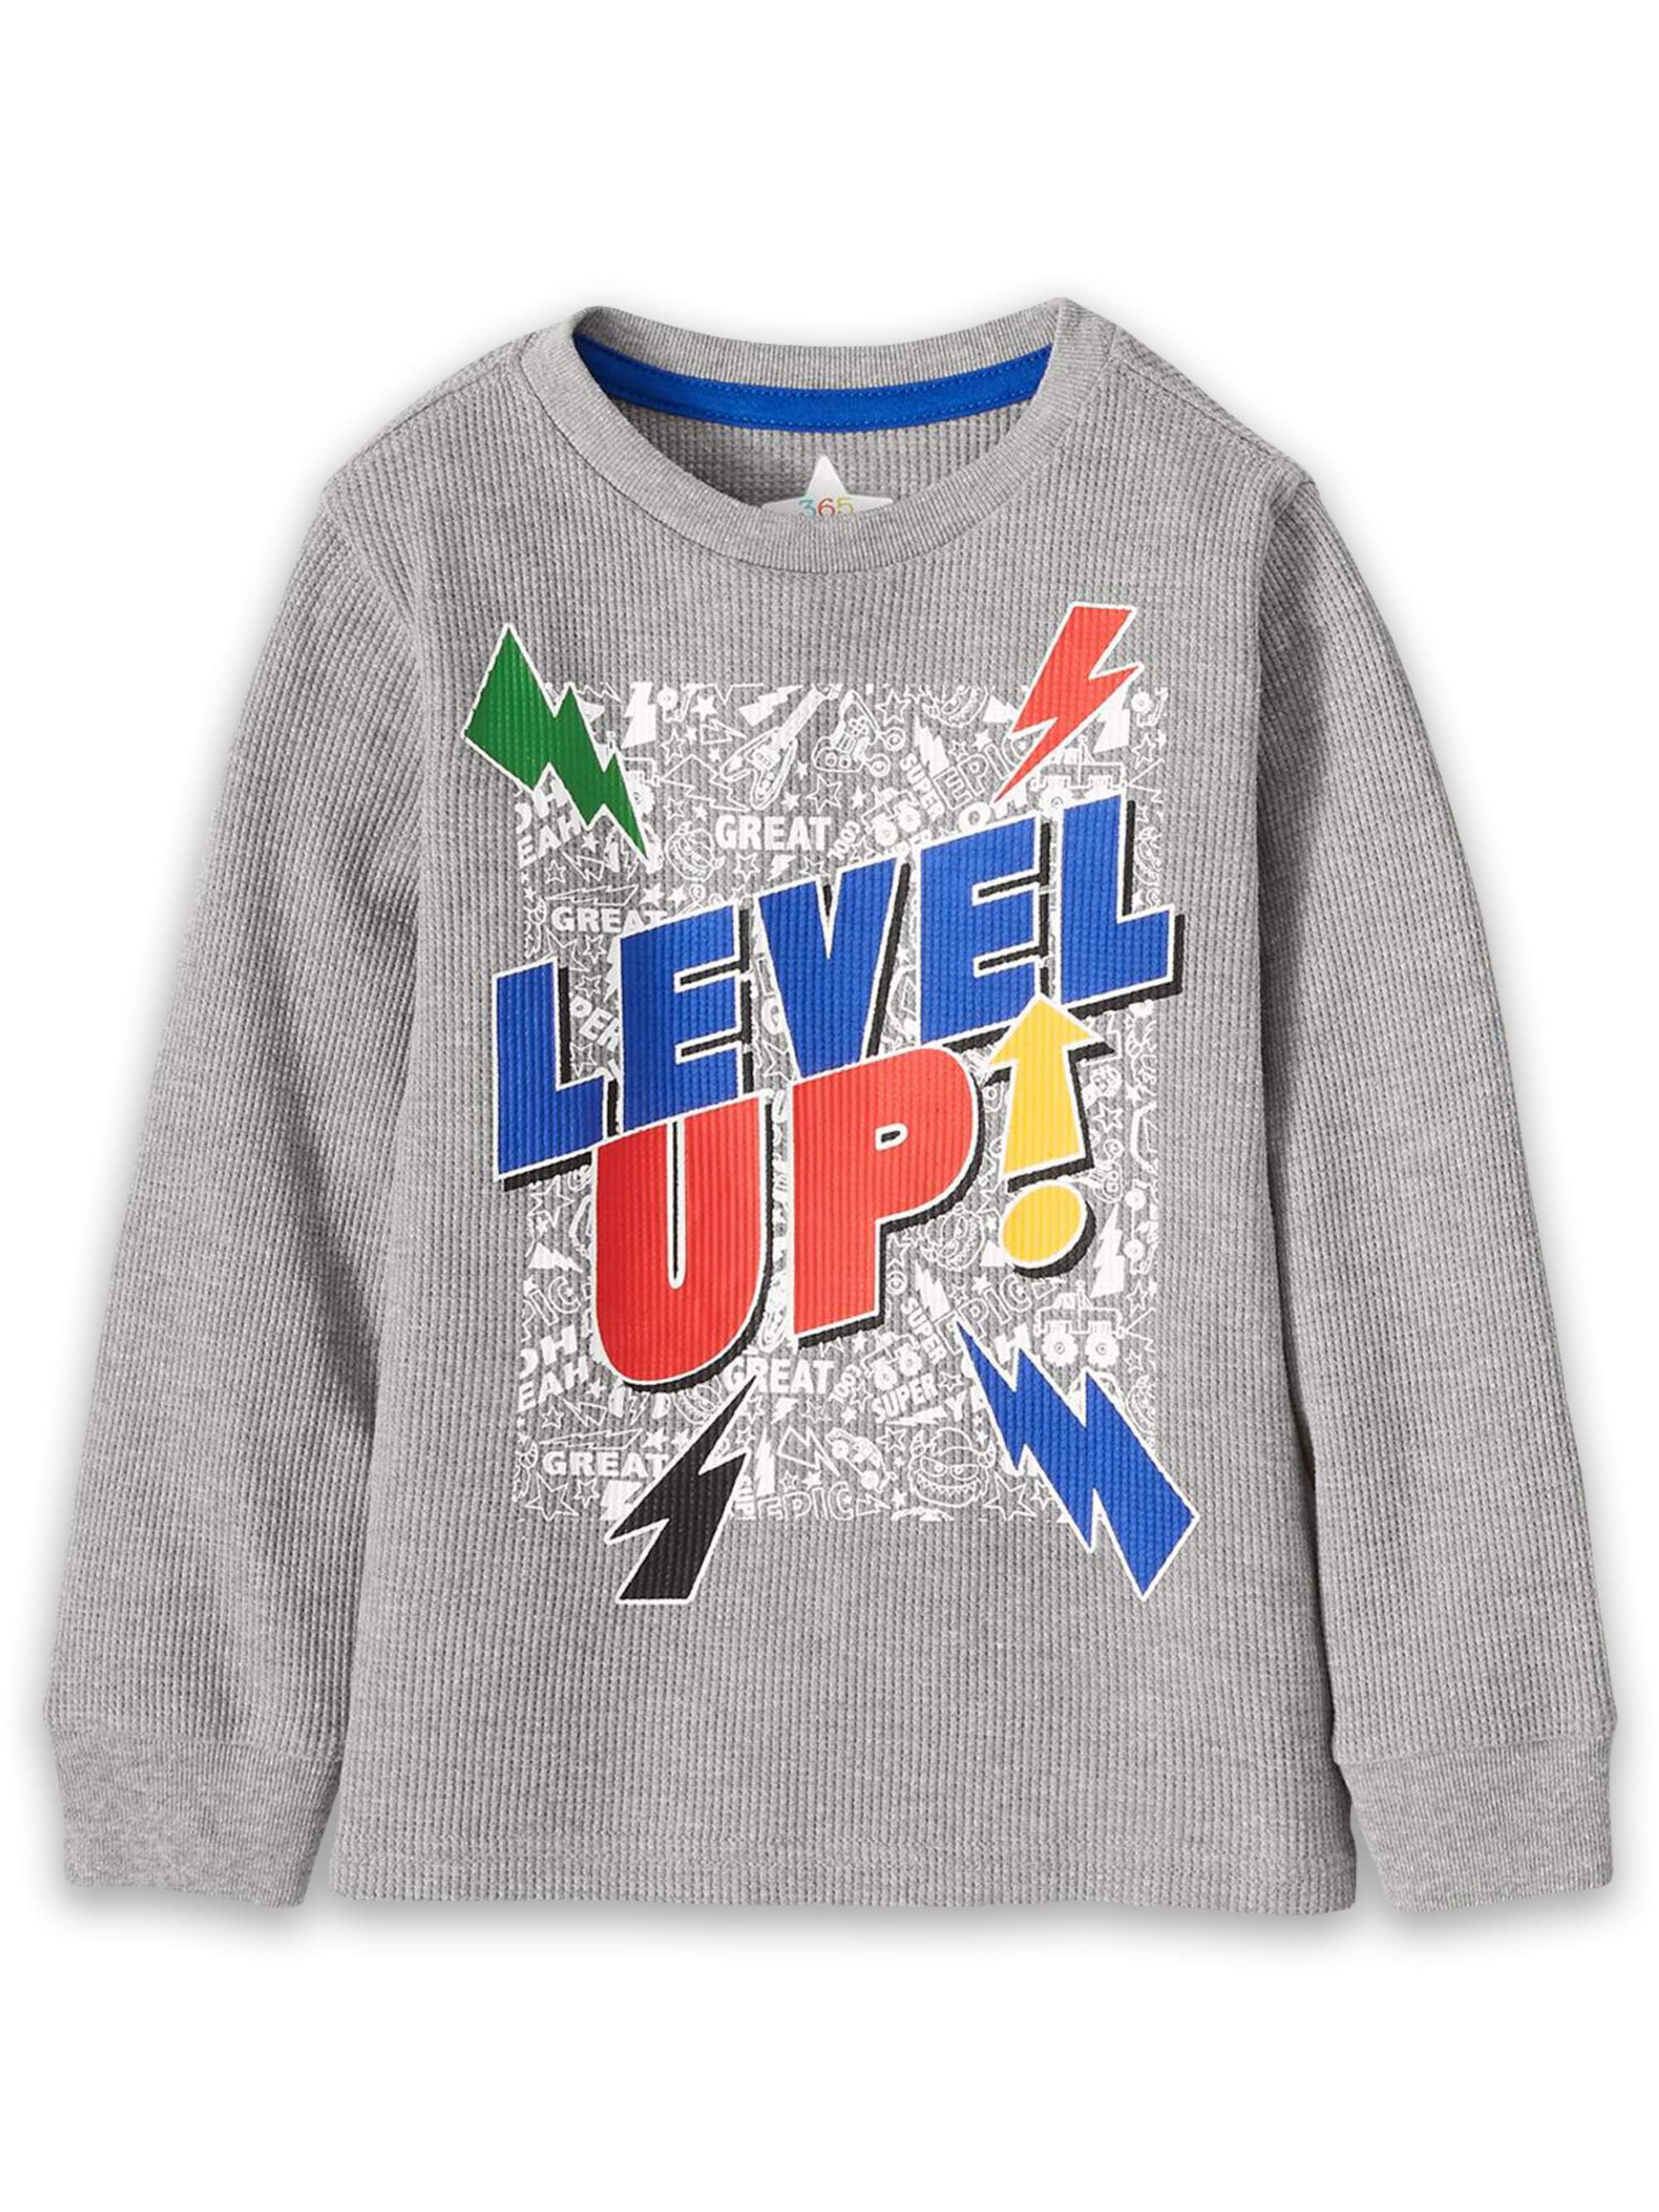 365 Kids Boys Long Sleeve Level Up Thermal Graphic Tee - Walmart.com